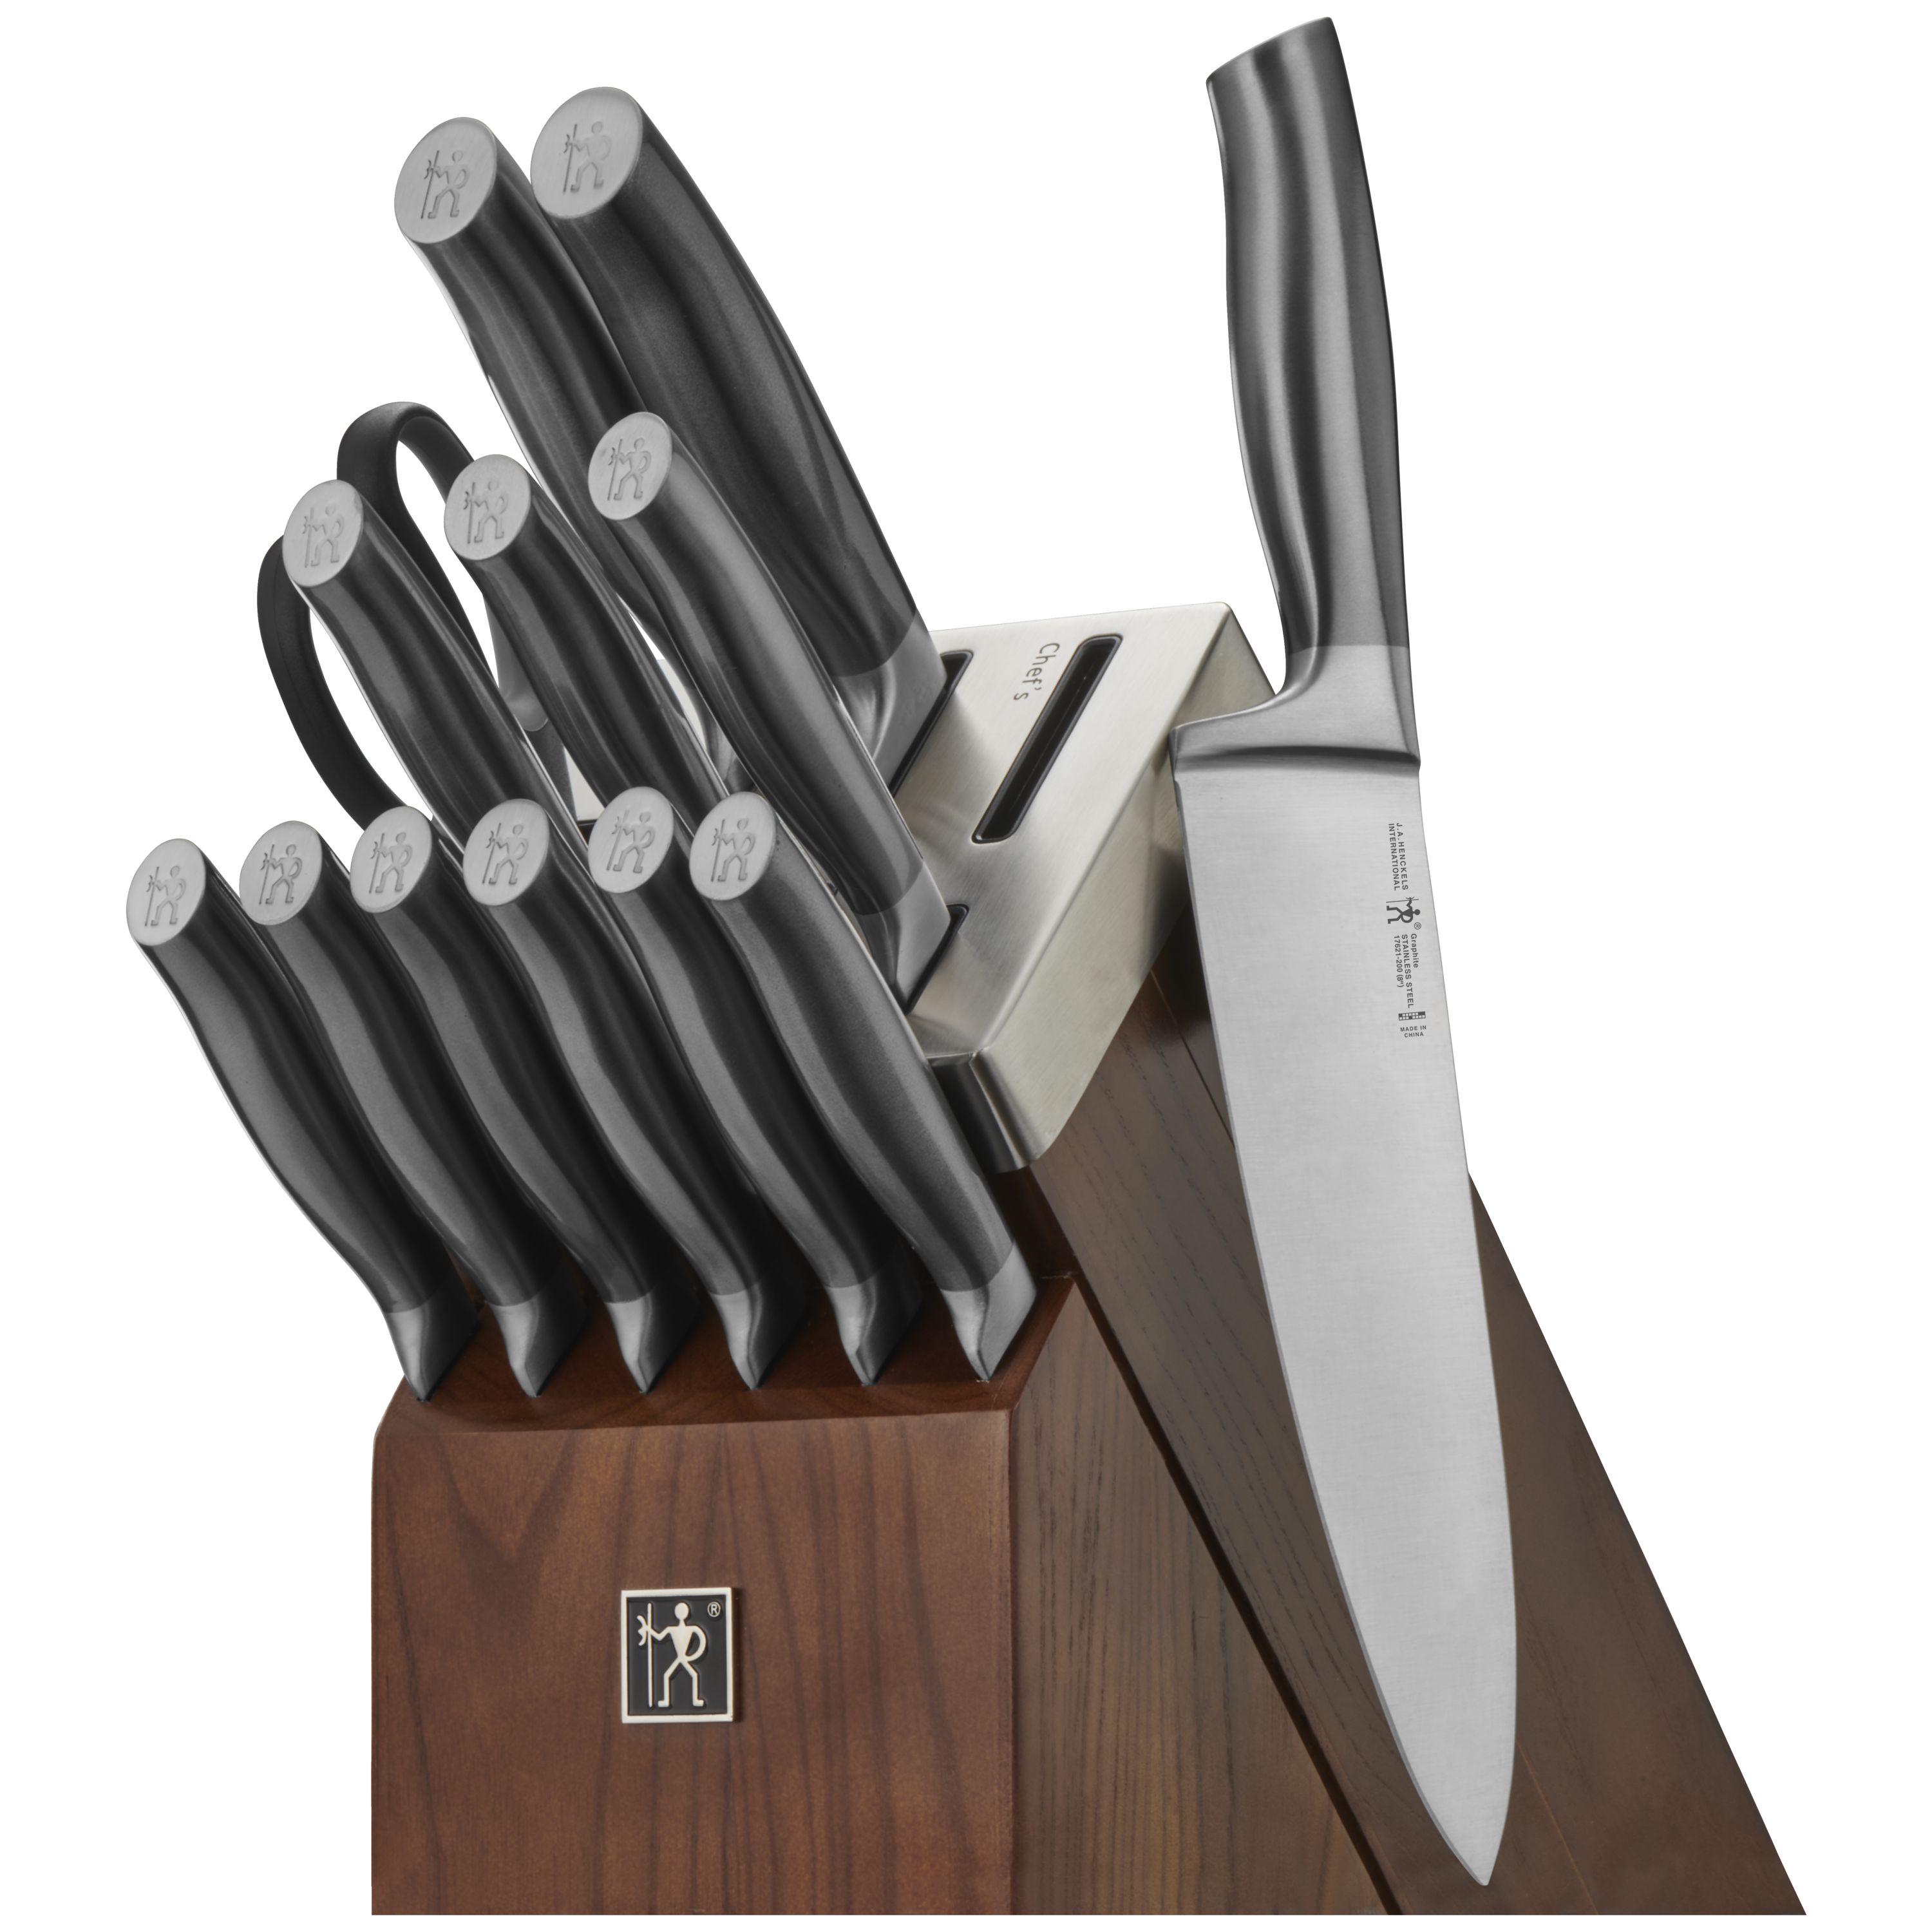 Henckels Forged Premio 14pc Knife Block Set